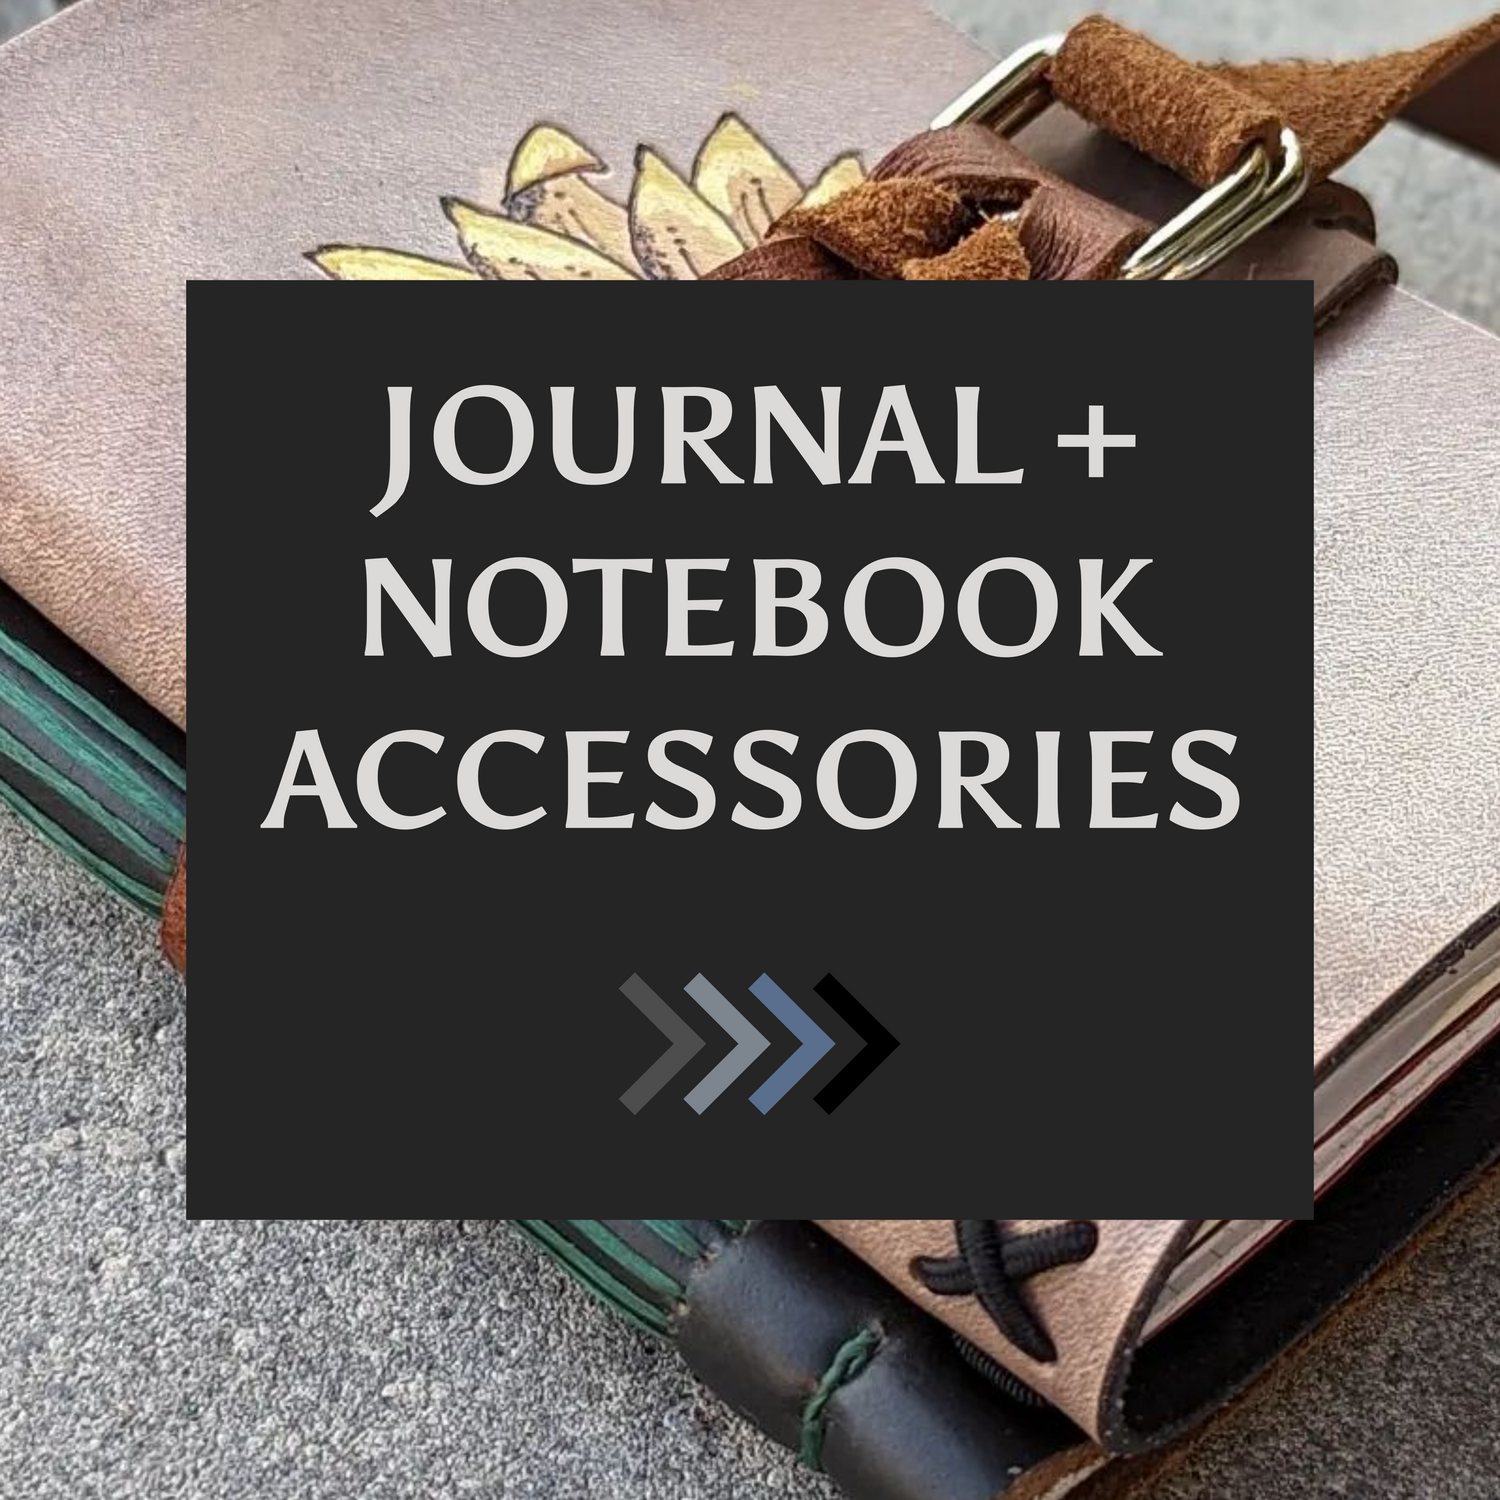 Journal + Notebook Accessories